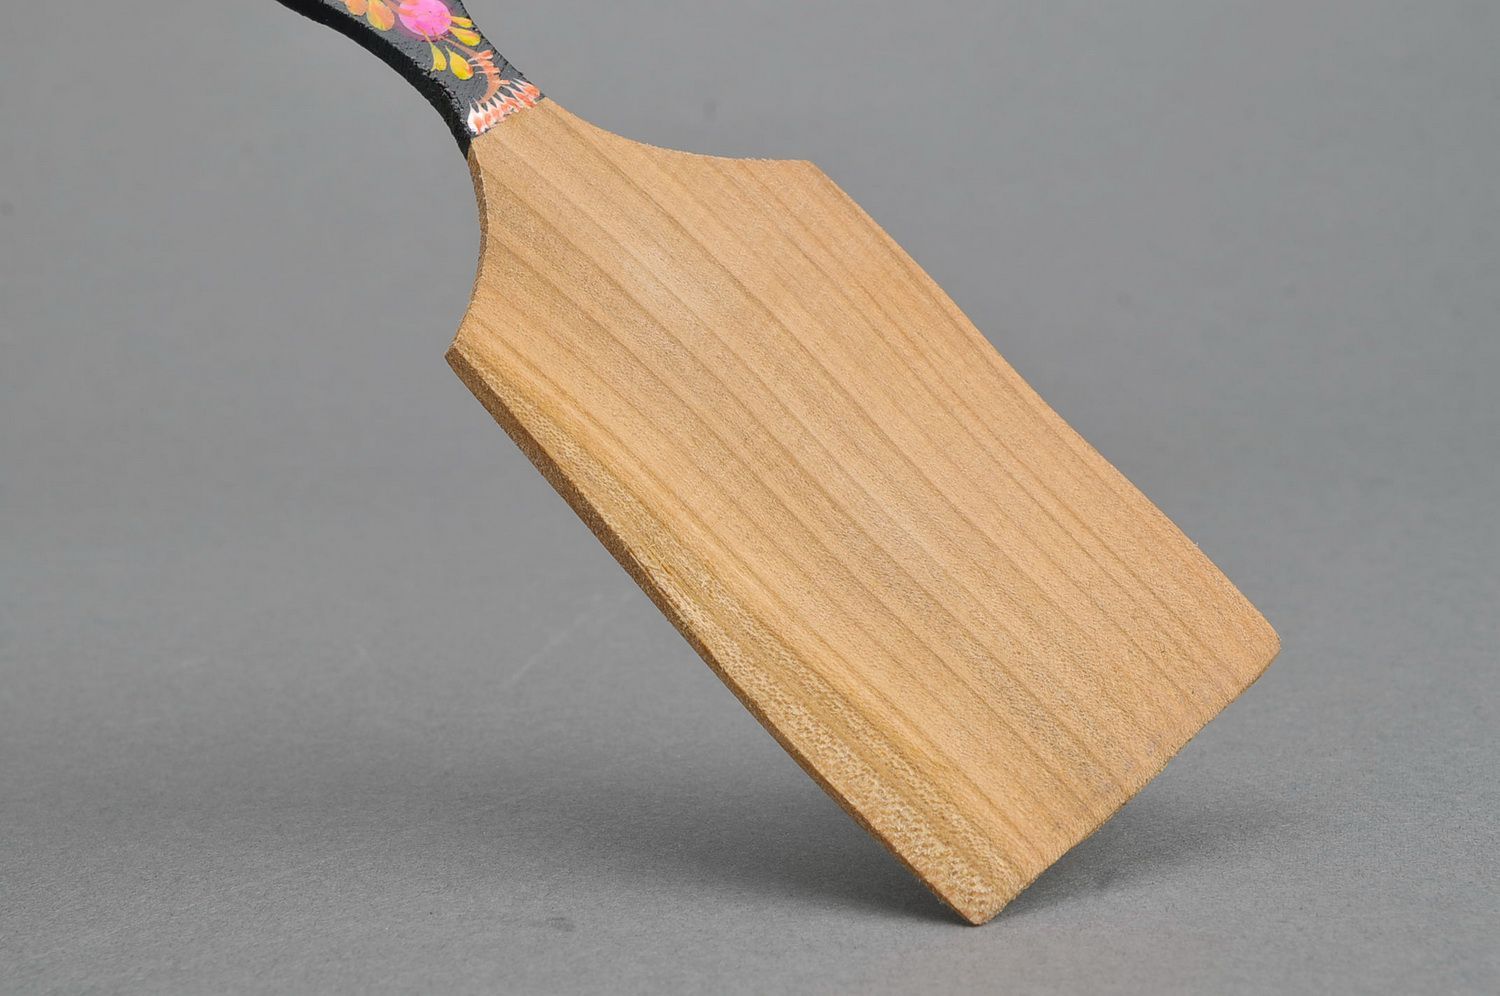 Wooden spatula photo 2